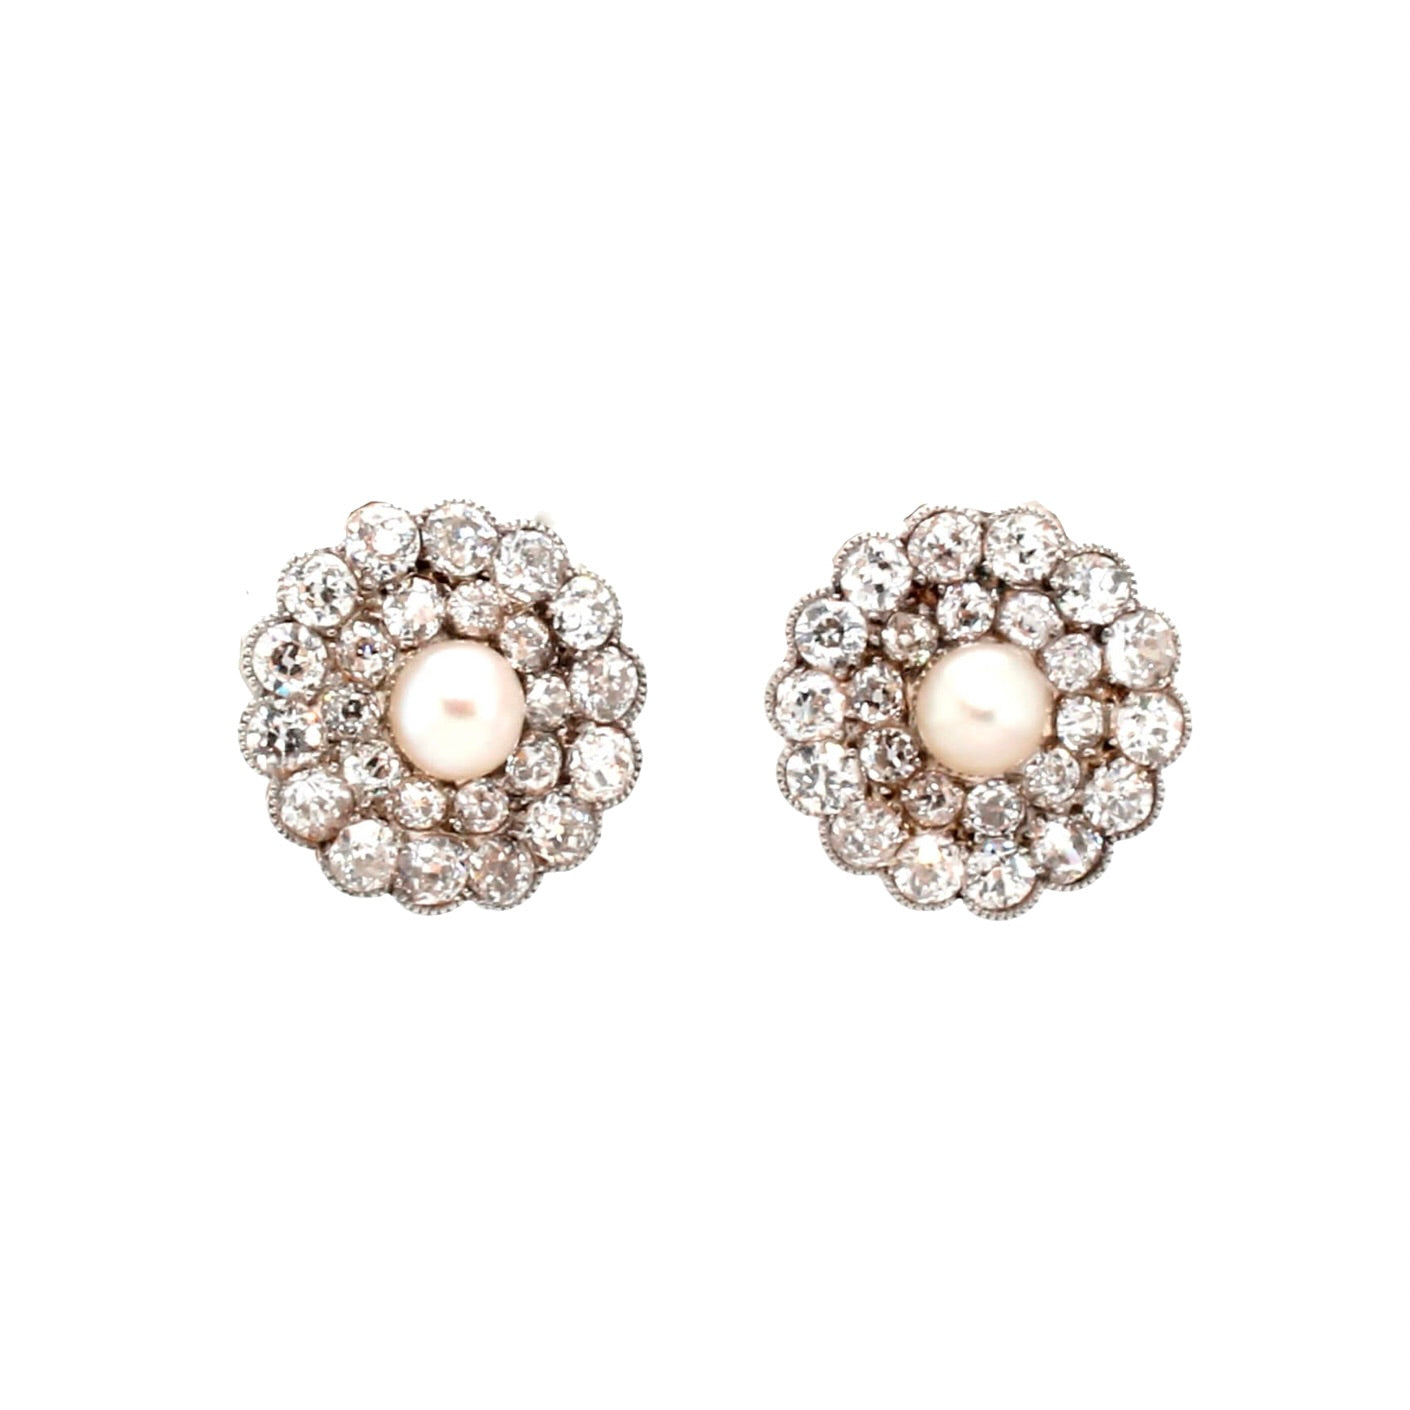 Edwardian Diamond and Pearl Earrings